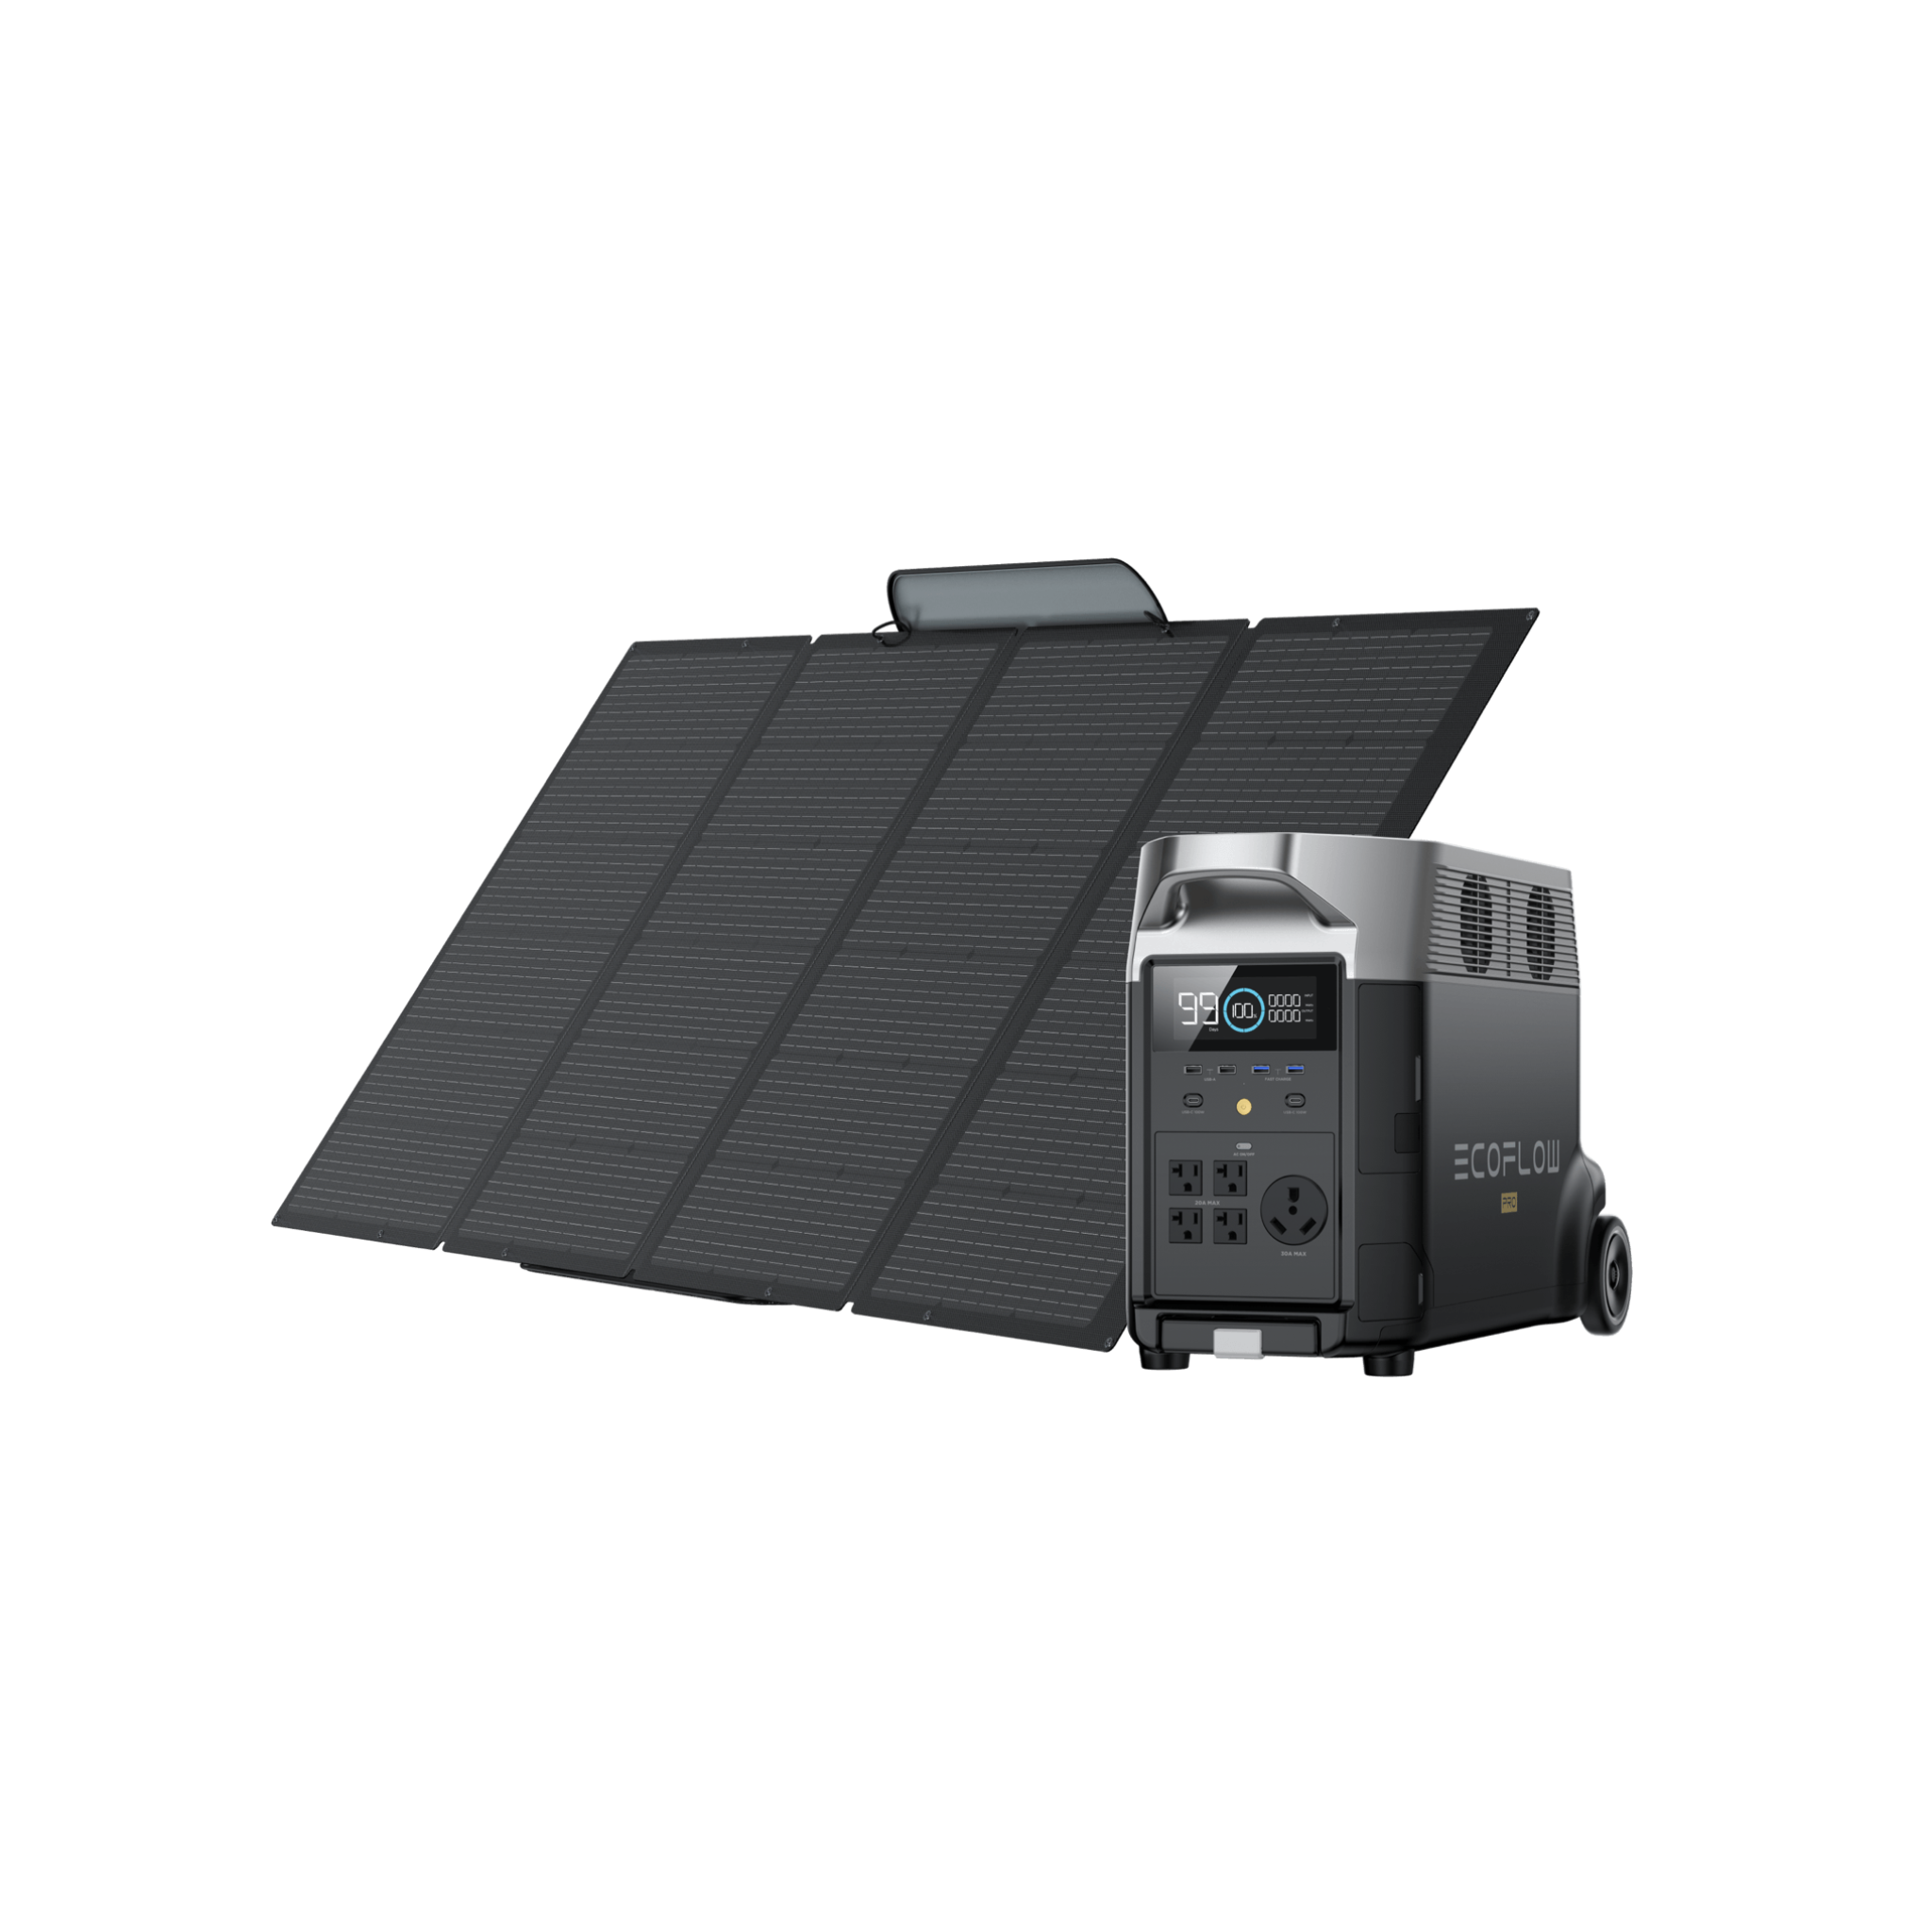 EcoFlow DELTA Pro with 400W Portable Solar Panel